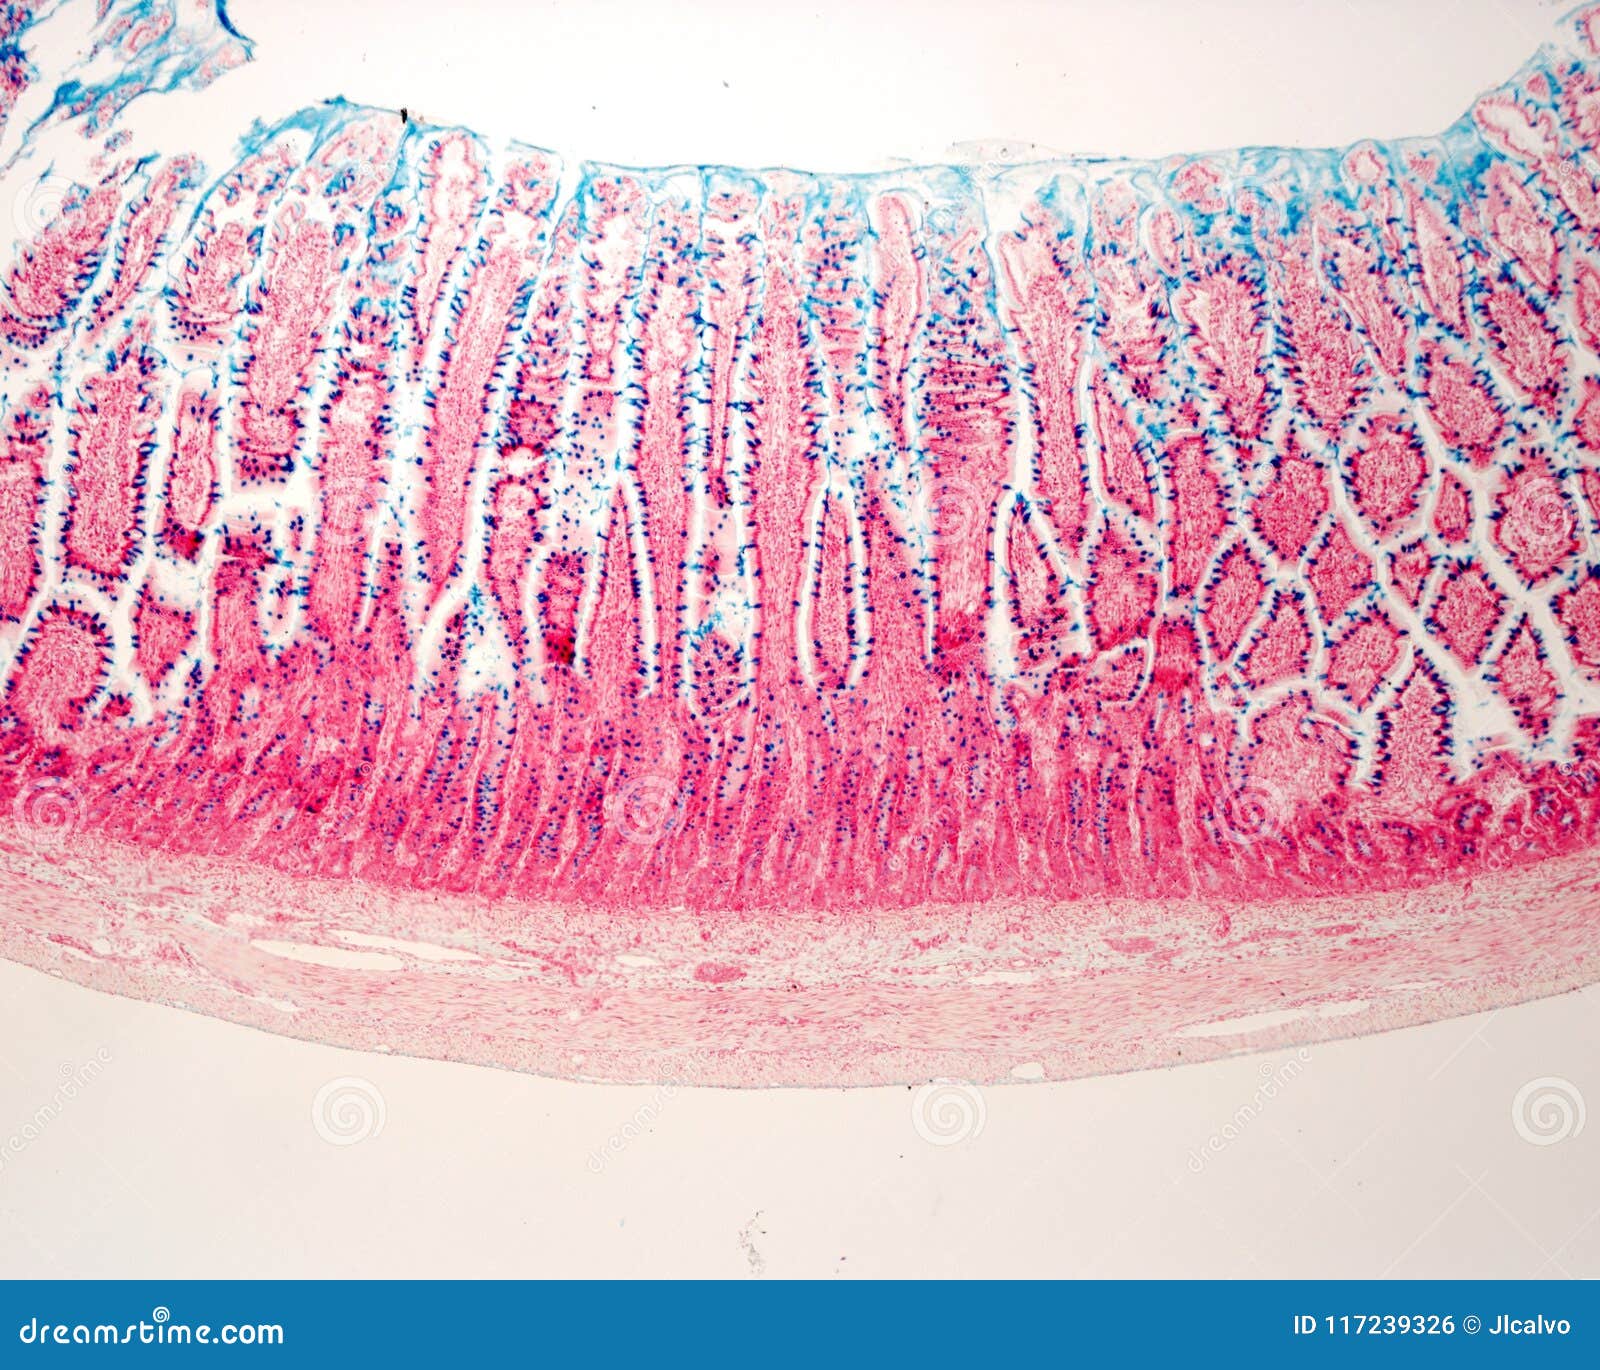 goblet cells. intestinal epithelium